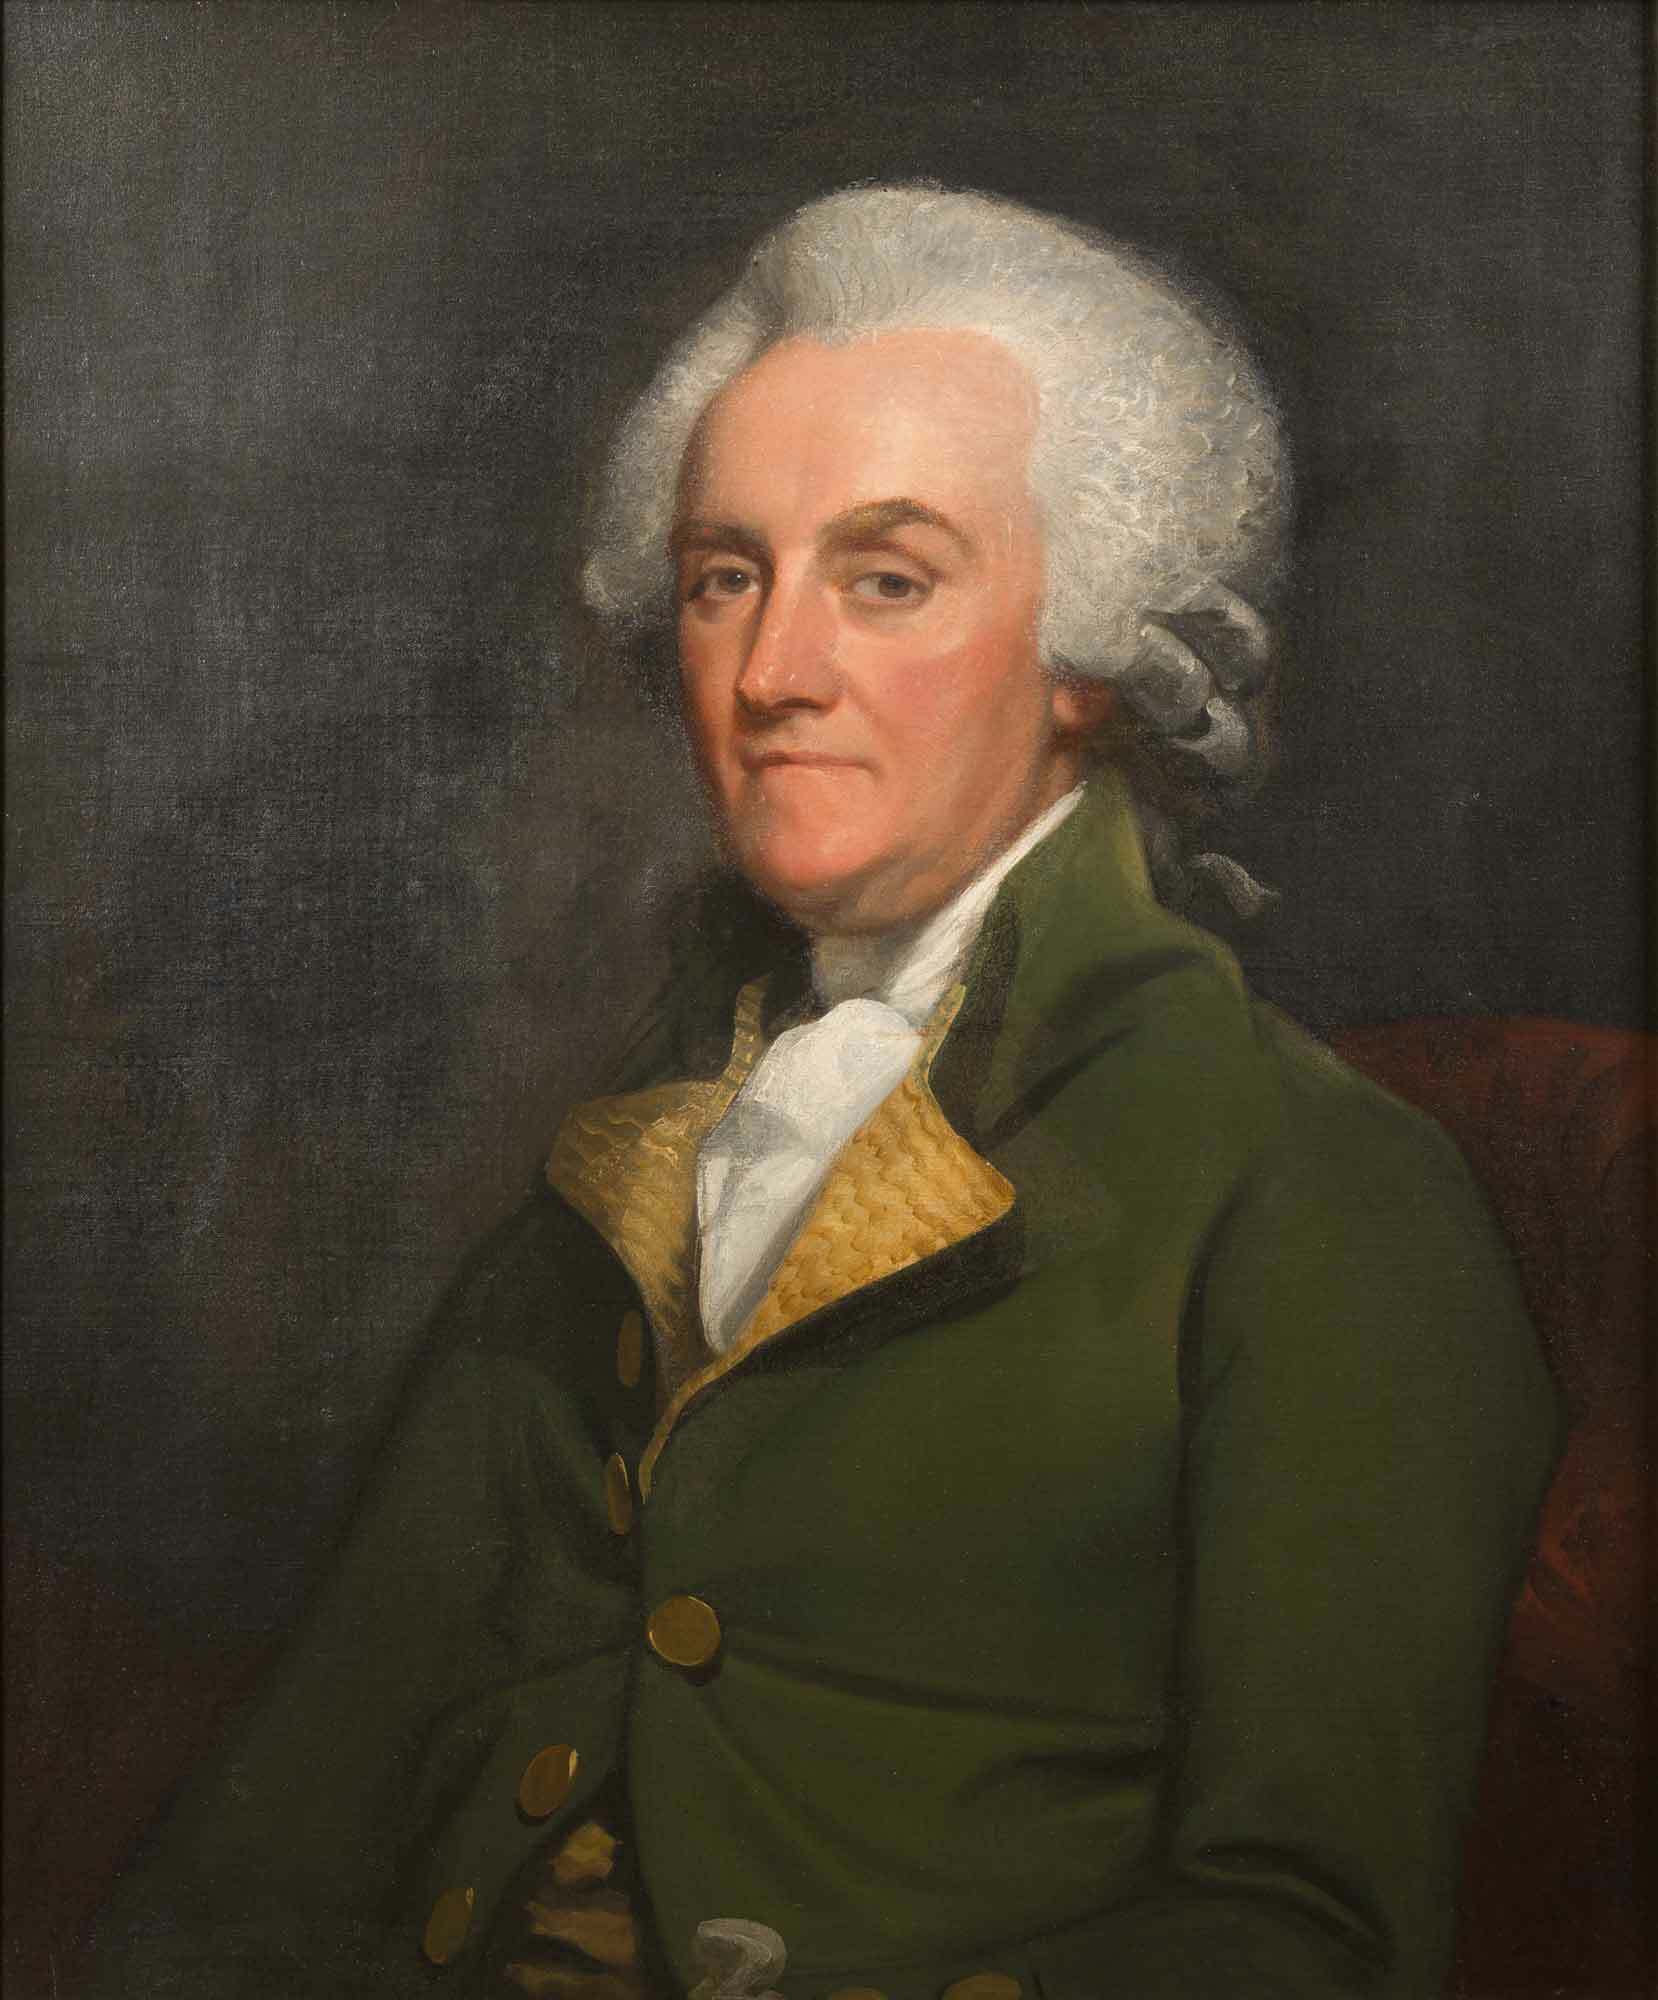 Portrait image of Benjamin Franklin's son William Franklin.